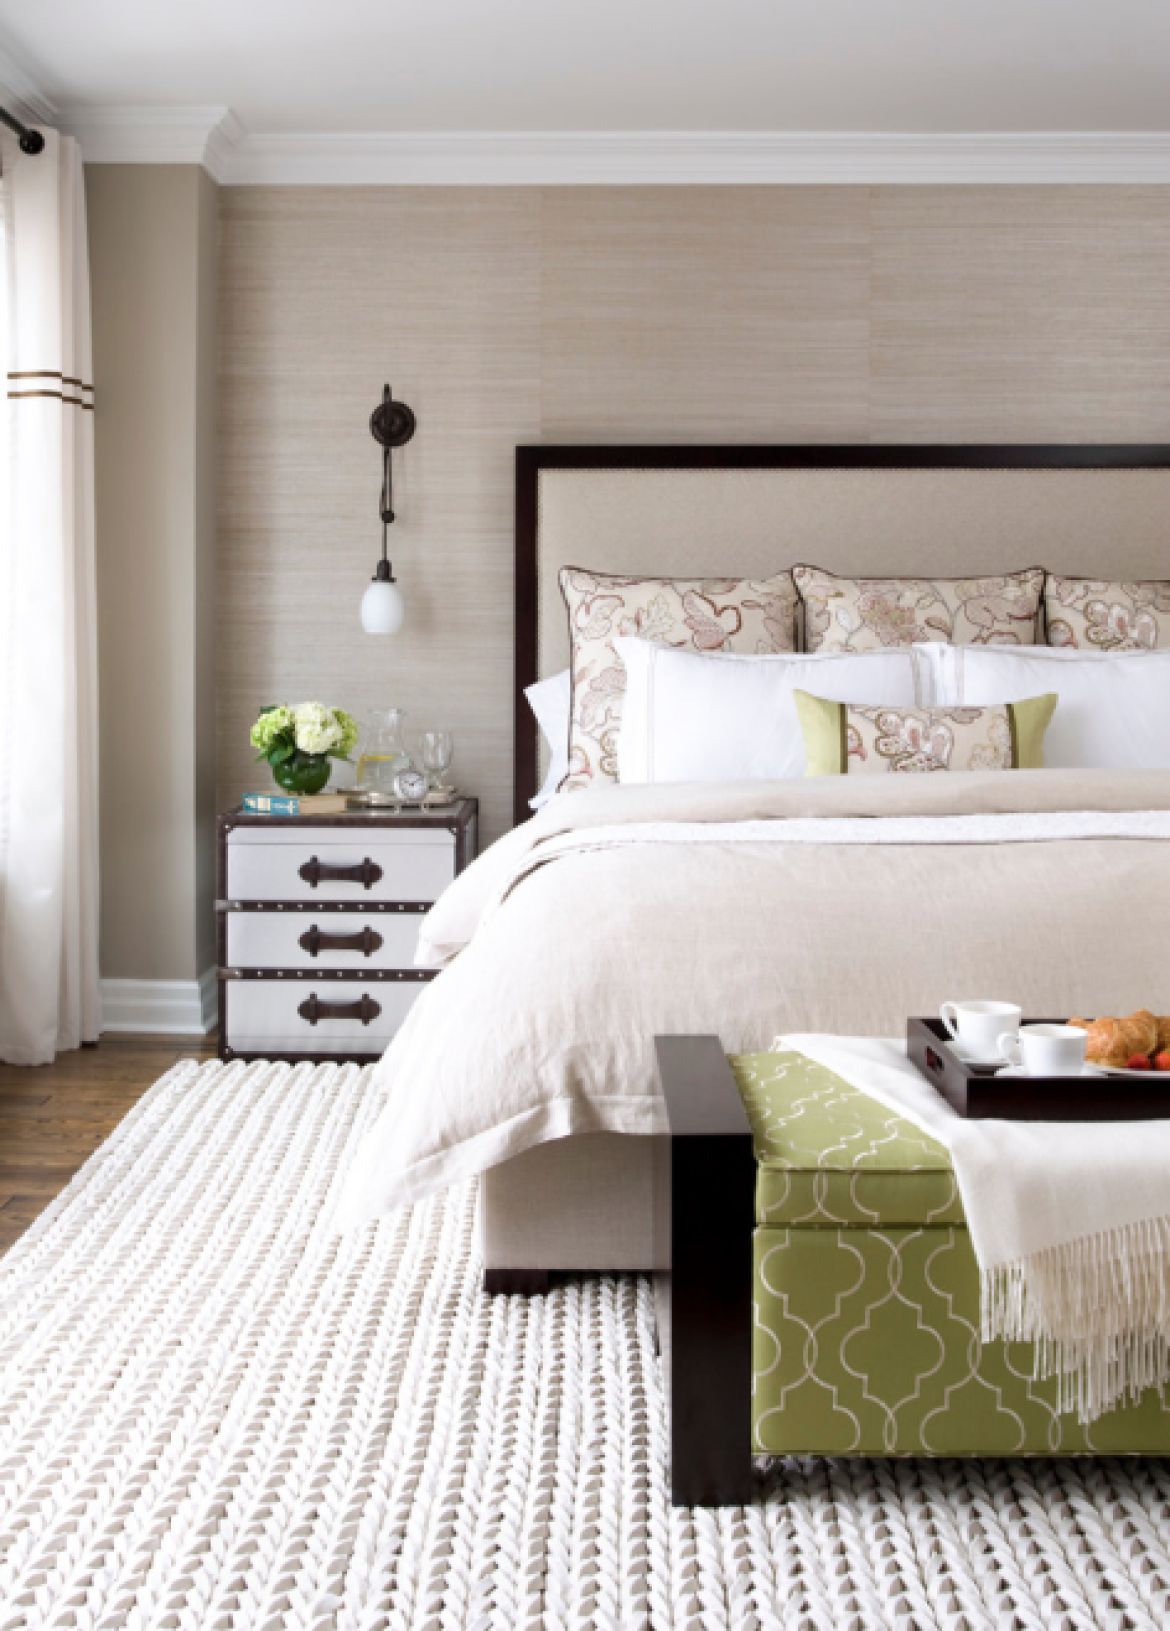 chelsea wallpaper for bedrooms,bedroom,furniture,bed,room,interior design